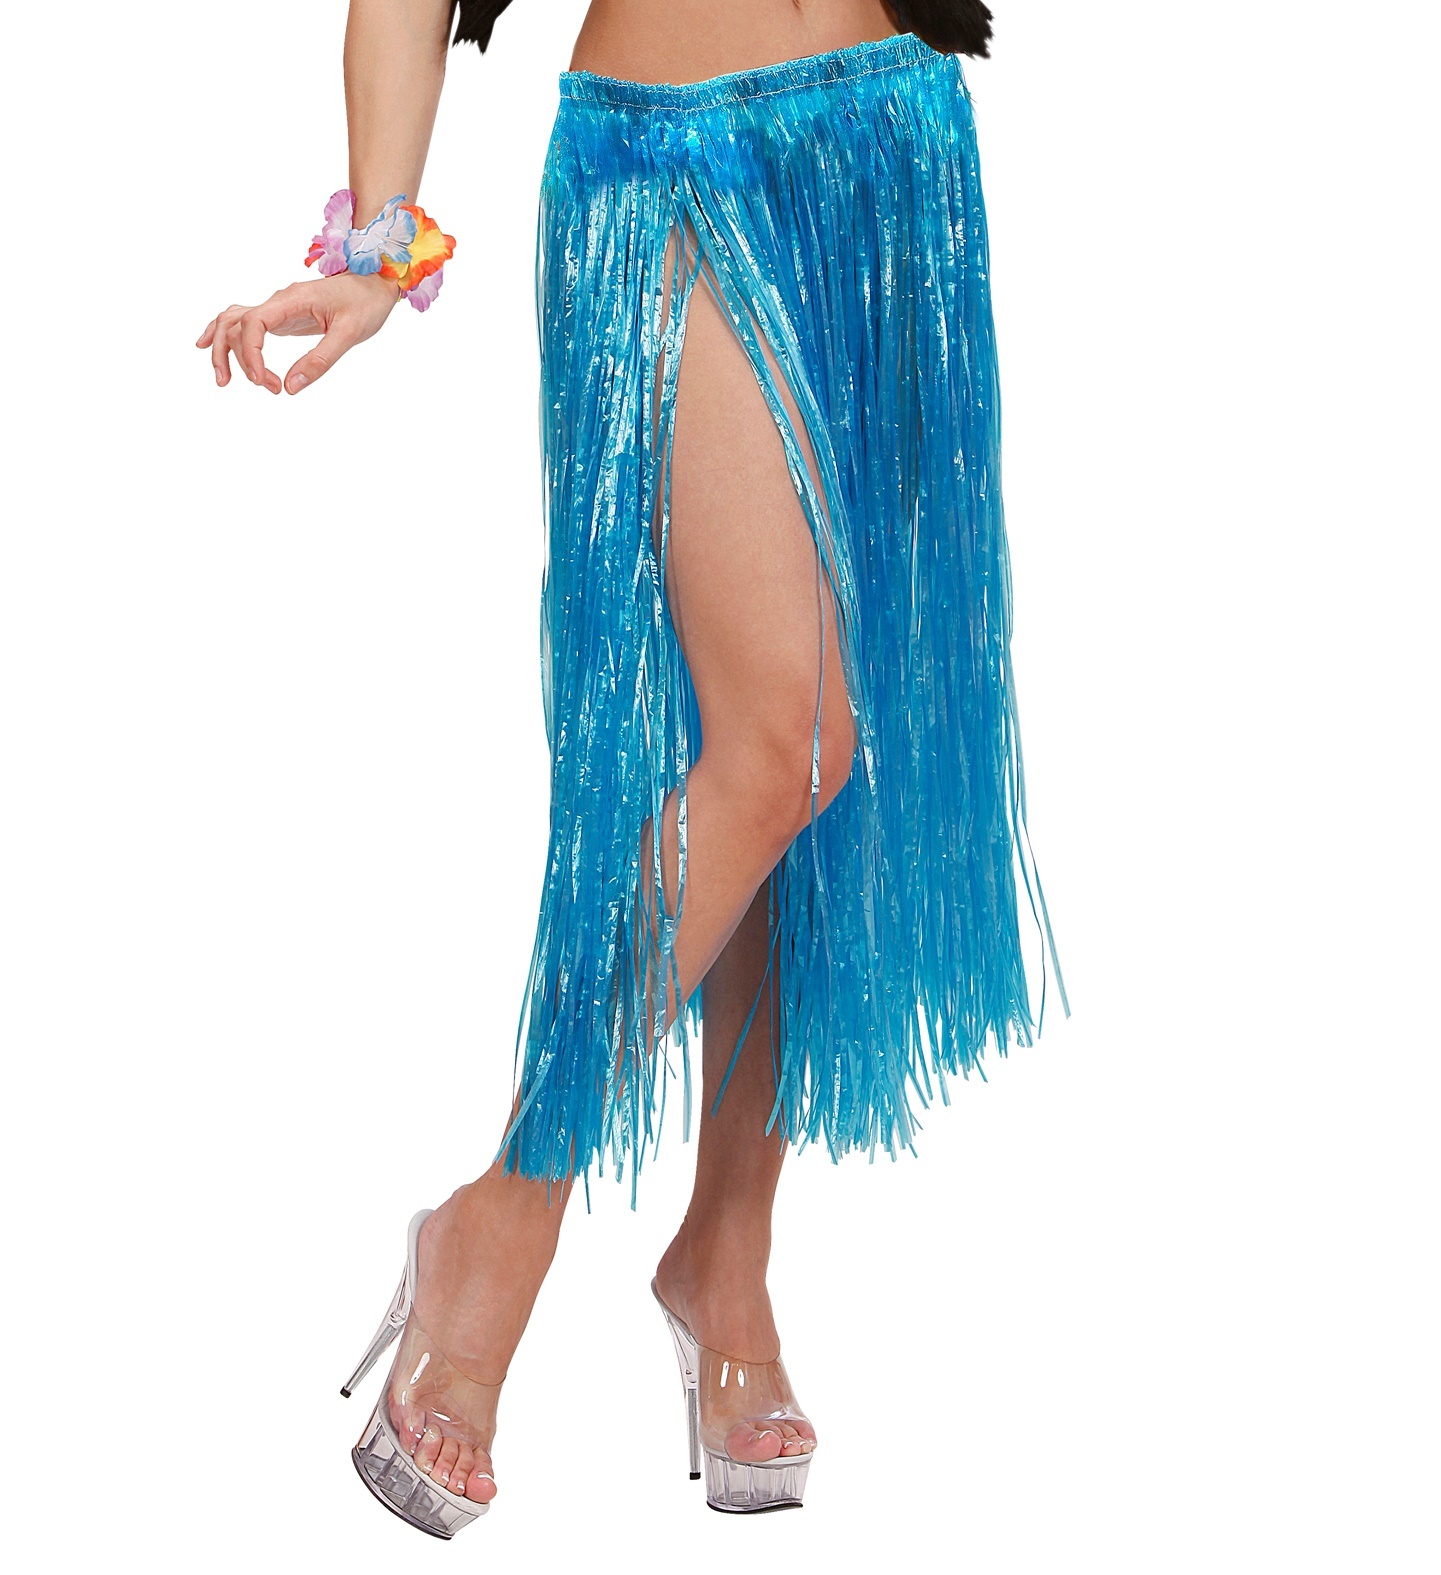 Widmann - Hawaii & Carribean & Tropisch Kostuum - Kalia Hawaiirok 75 Centimeter, Blauw Vrouw - blauw - One Size - Carnavalskleding - Verkleedkleding